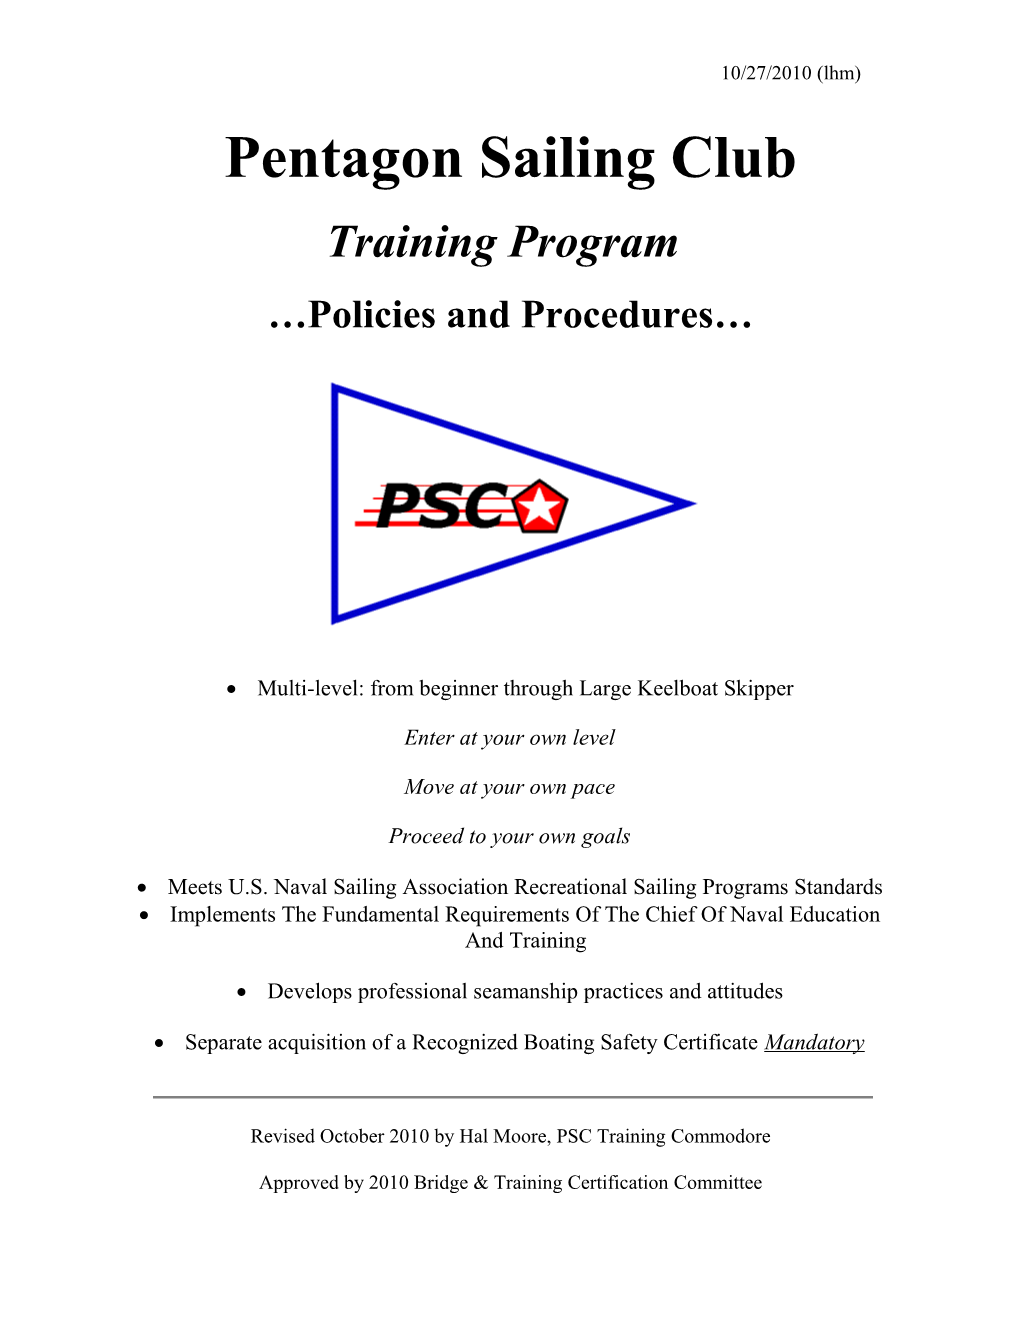 Pentagon Sailing Club